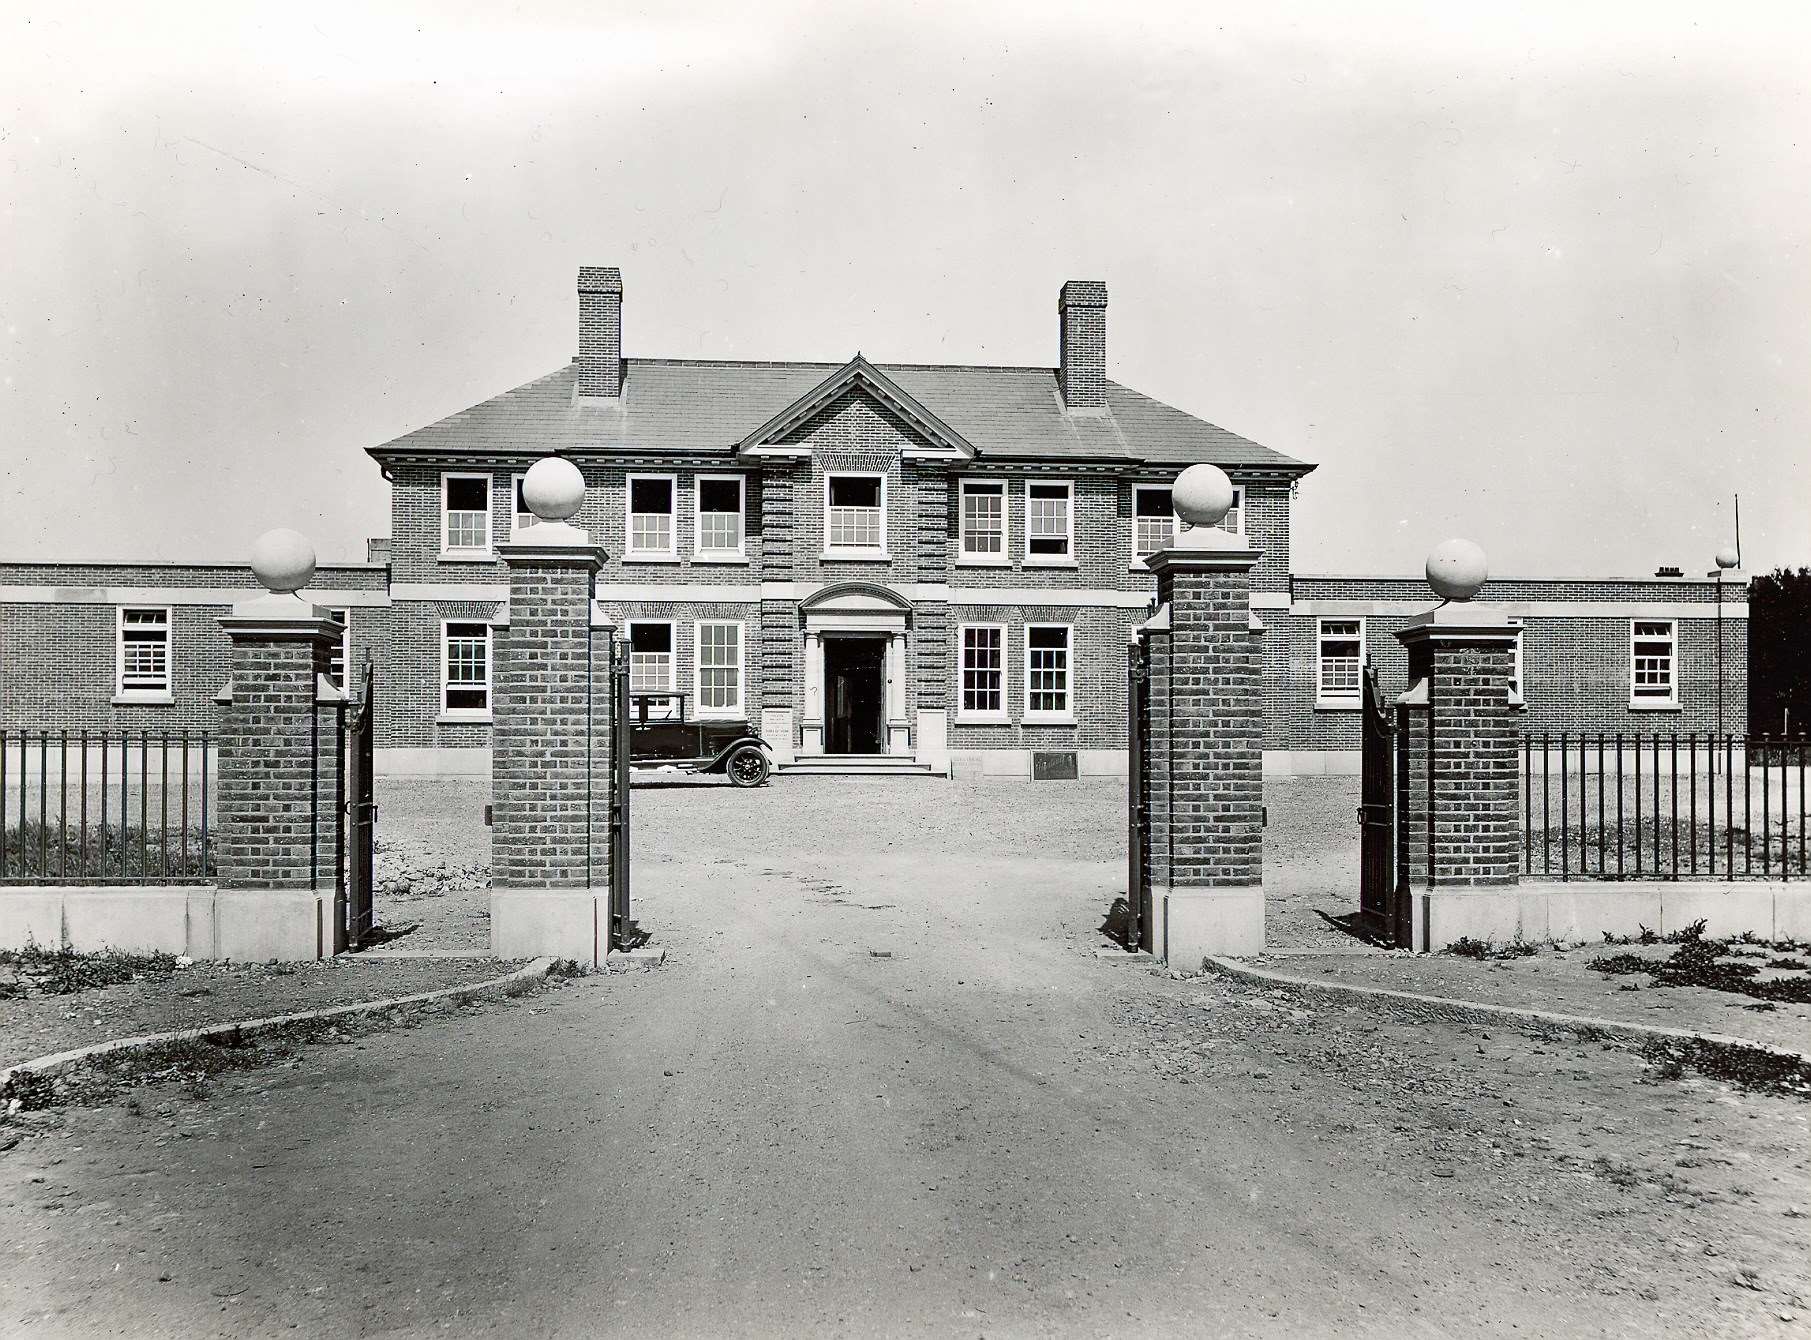 The former Ashford Hospital in Kings Avenue